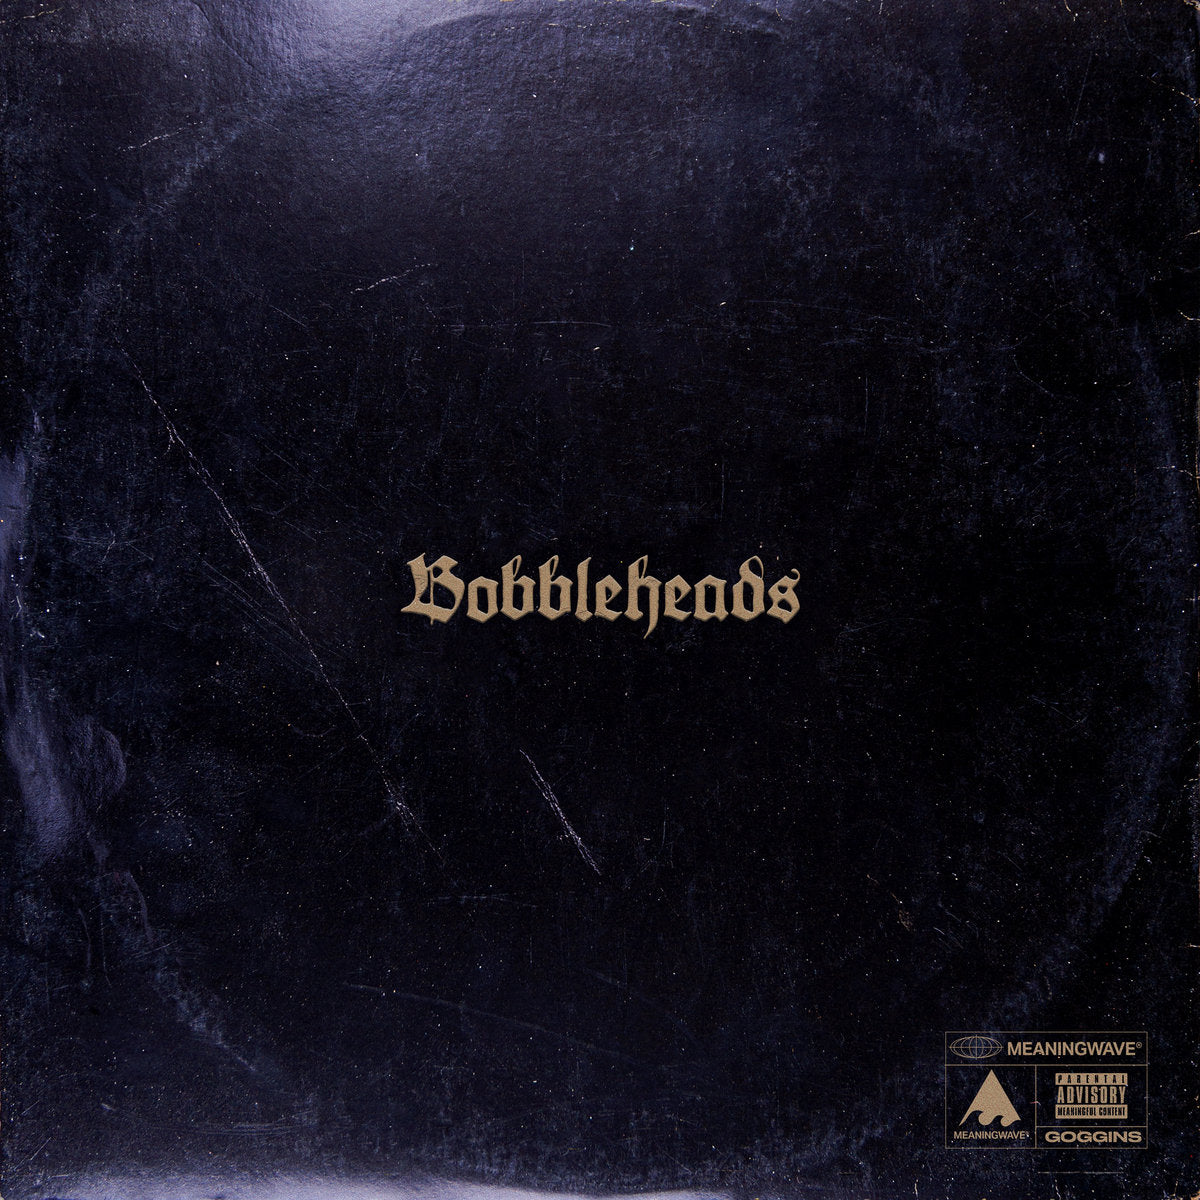 BOBBLEHEADS (ft. David Goggins)